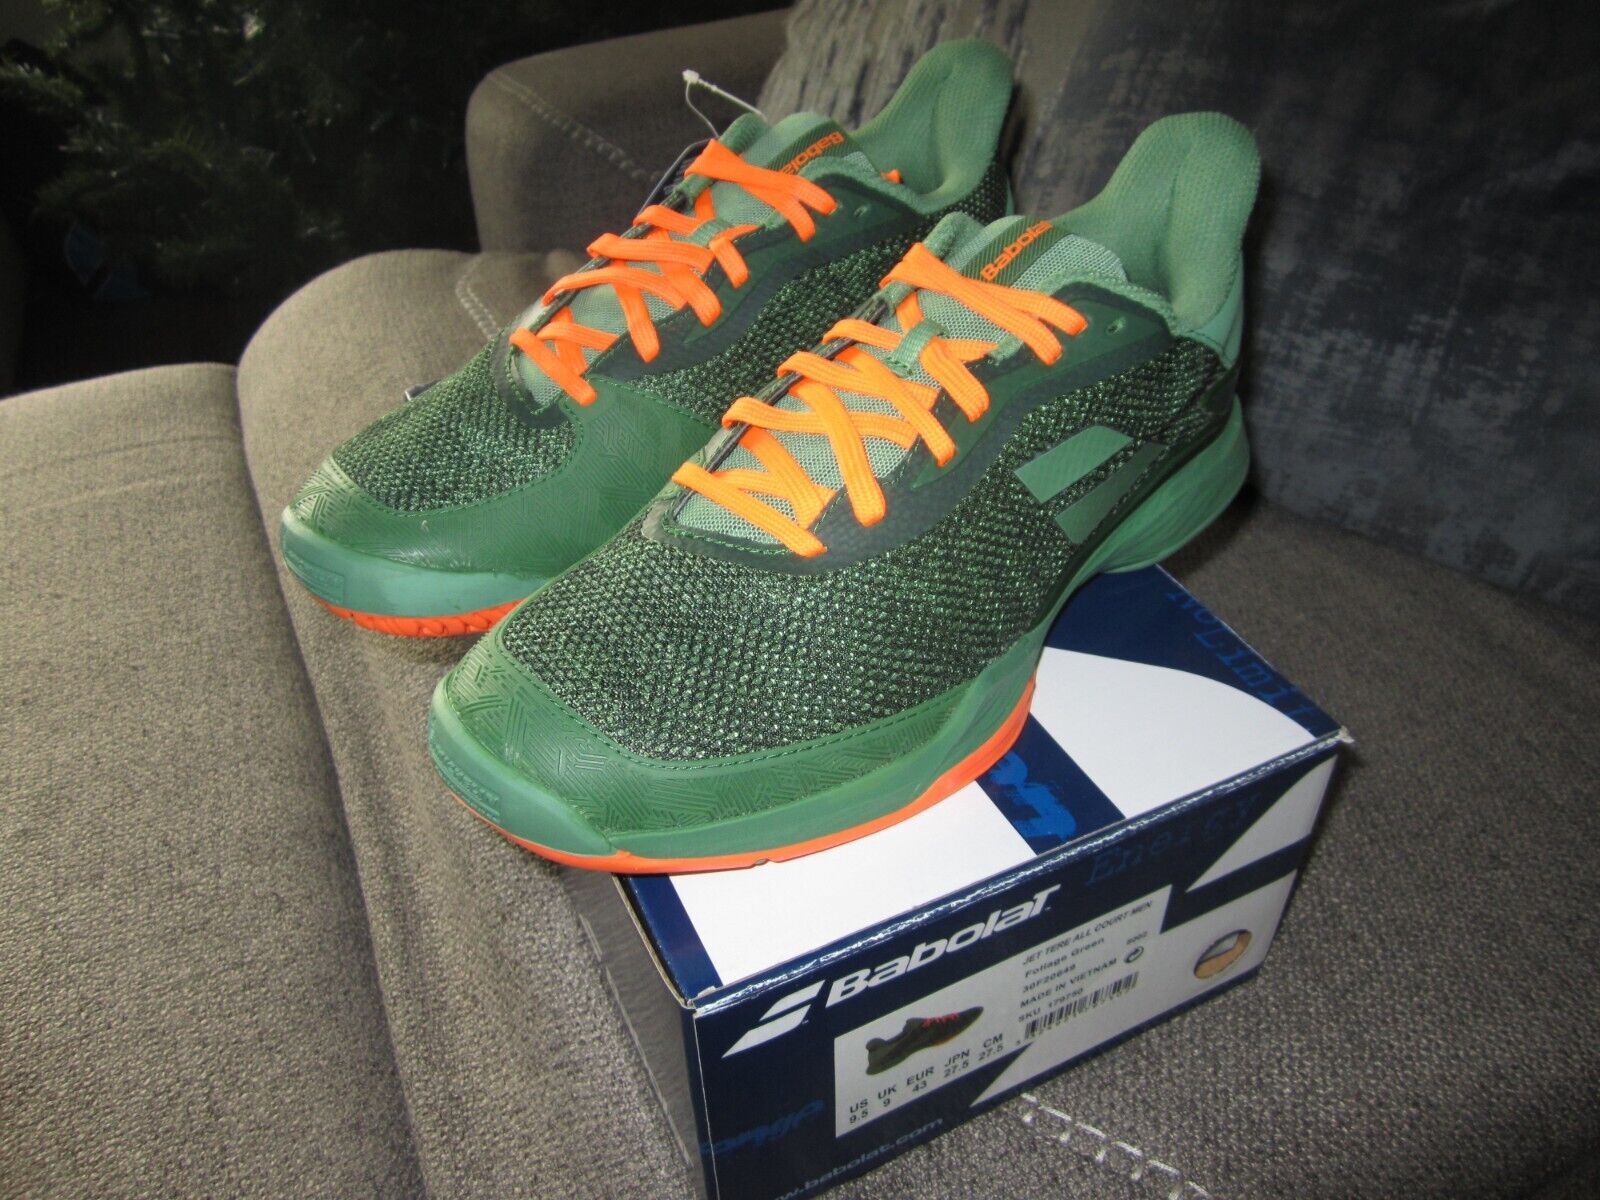 New-babolat Jet Tere All Court Tennis Shoes Size 9.5 Green/orange-rare-men's